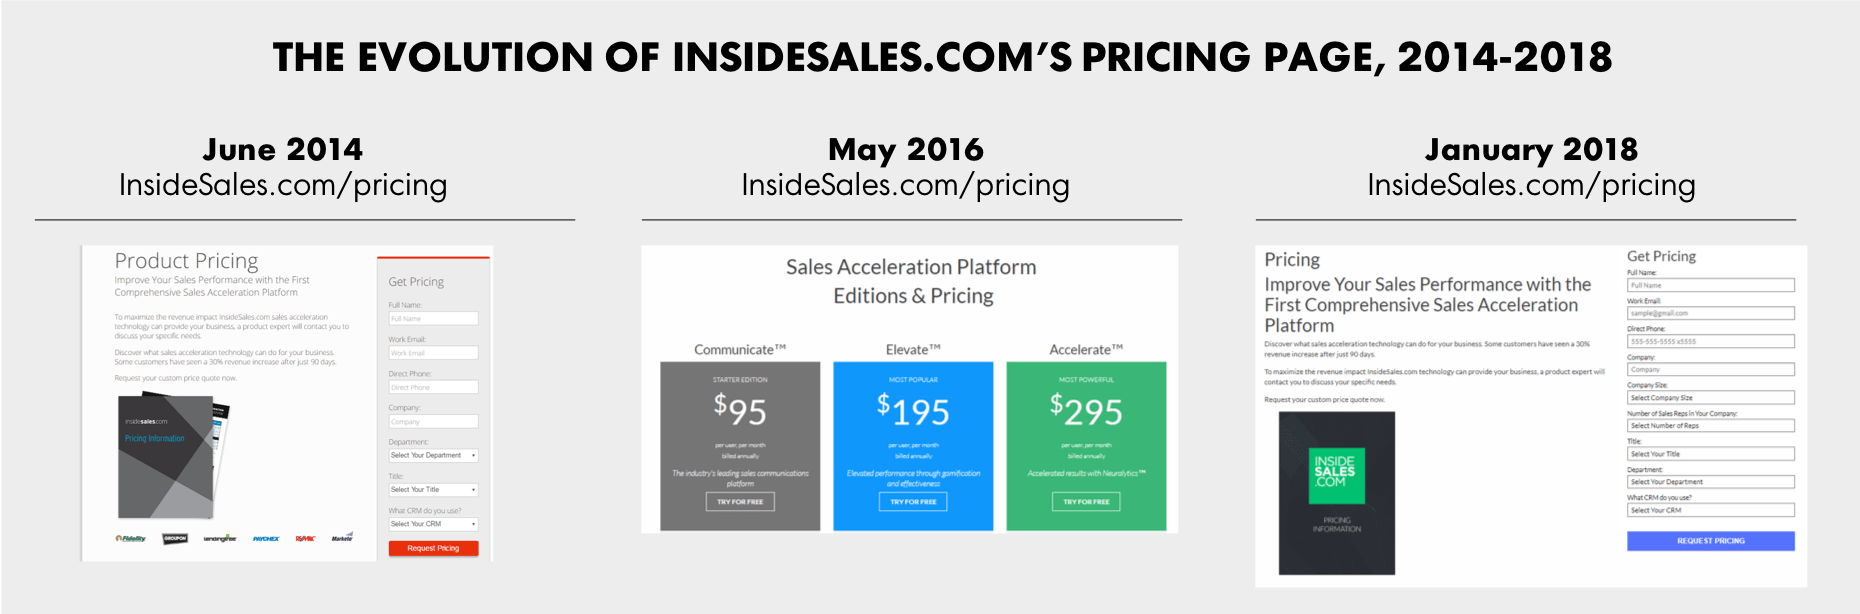 InsideSales pricing evolution